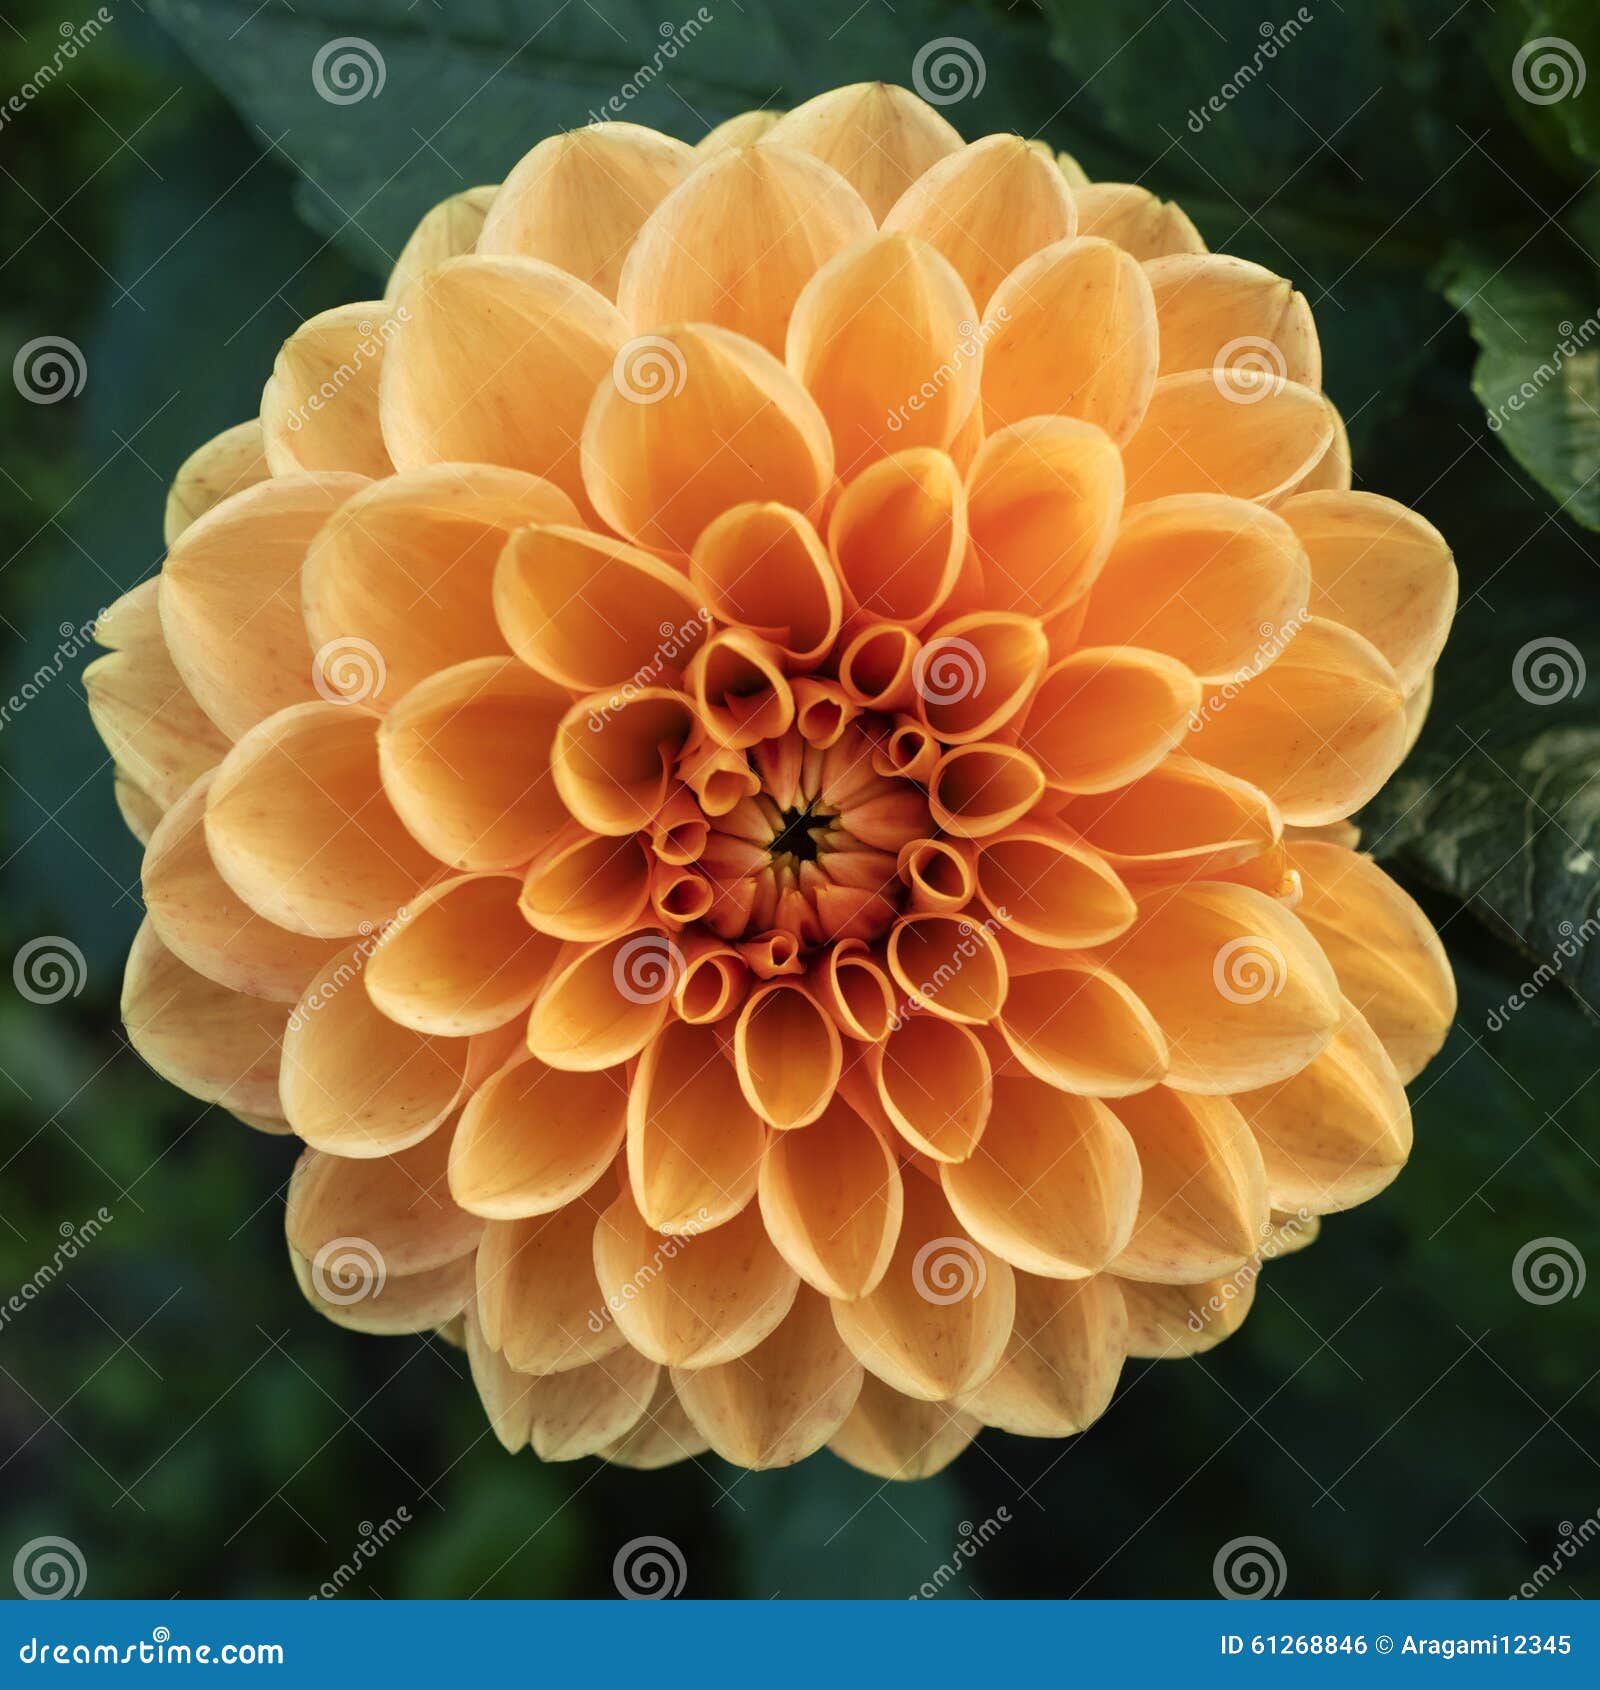  Orange  aster  flower stock photo Image of fresh bouquet 